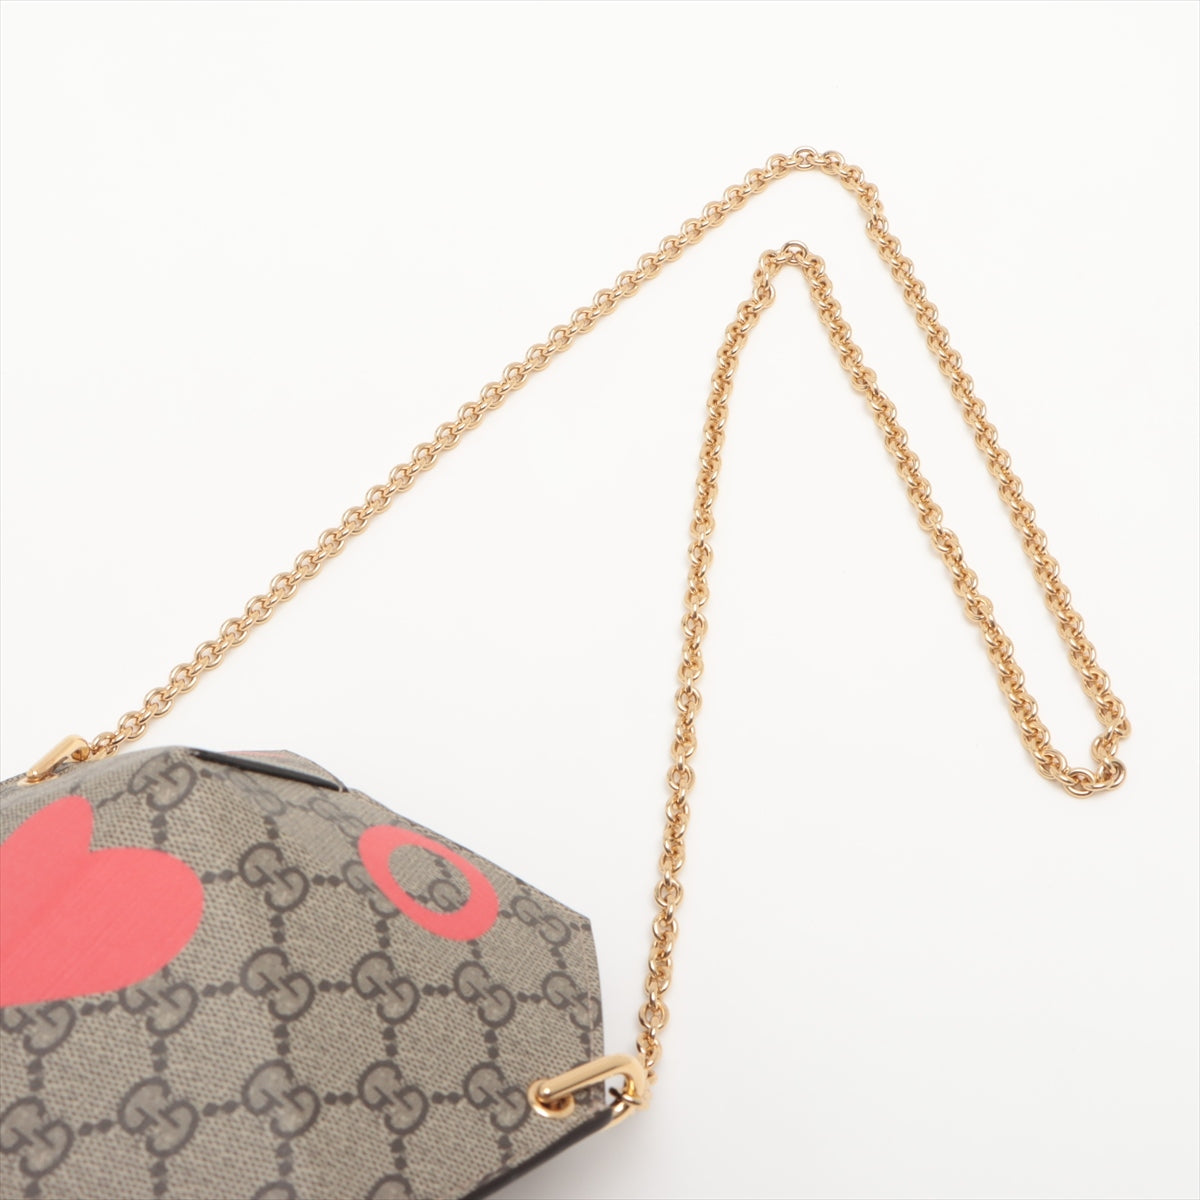 Gucci GG Supreme small heart Chain shoulder bag Beige x red 678131